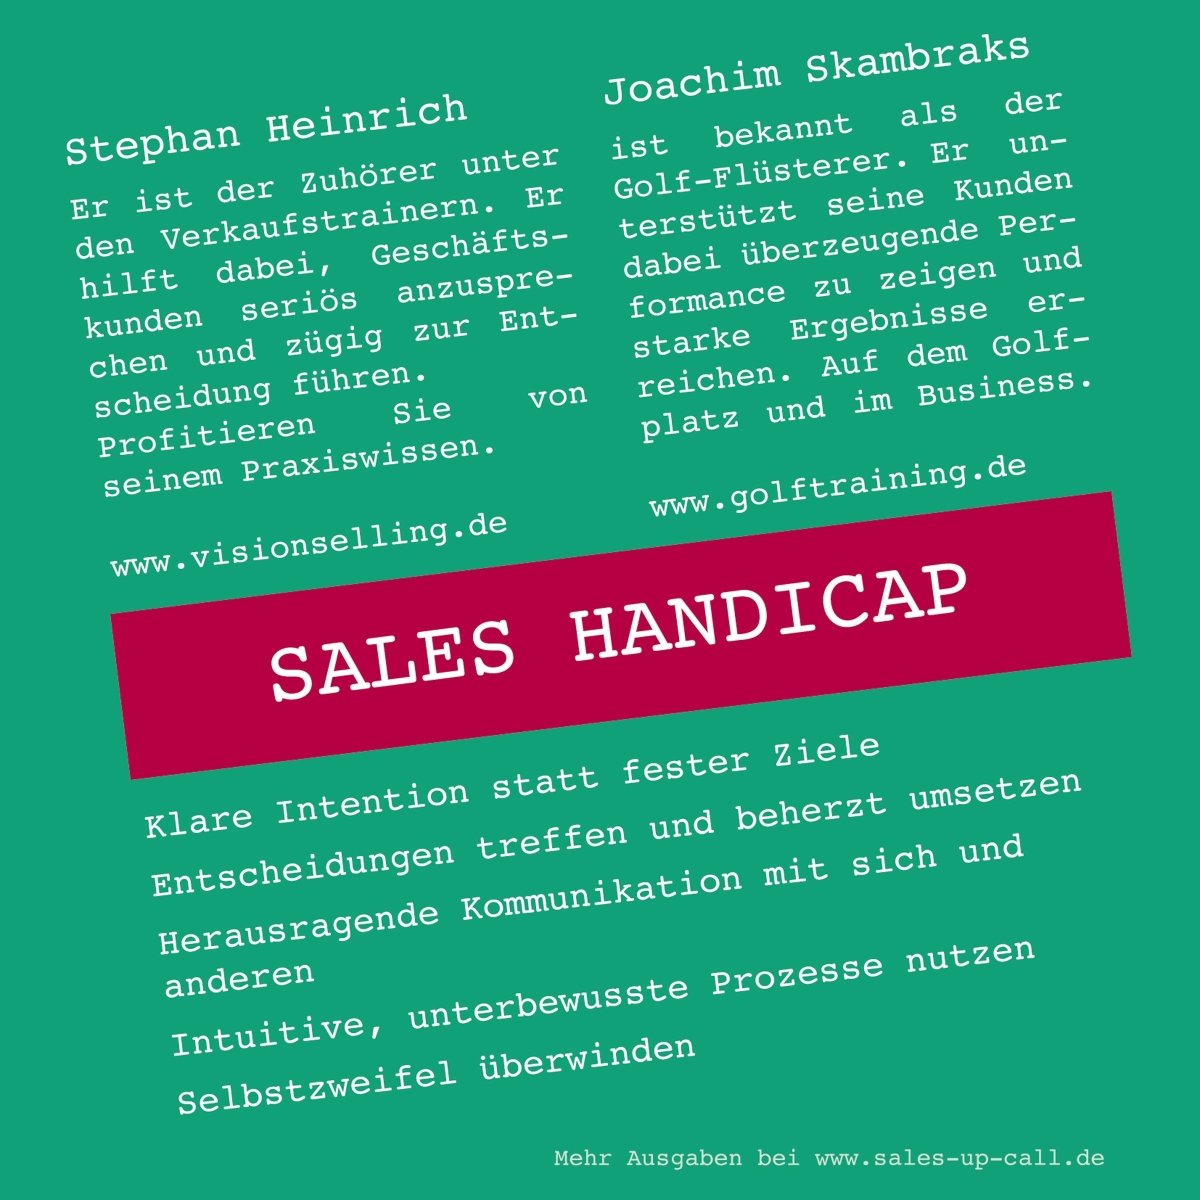 Sales Handicap - Sales-up-Call - Stephan Heinrich